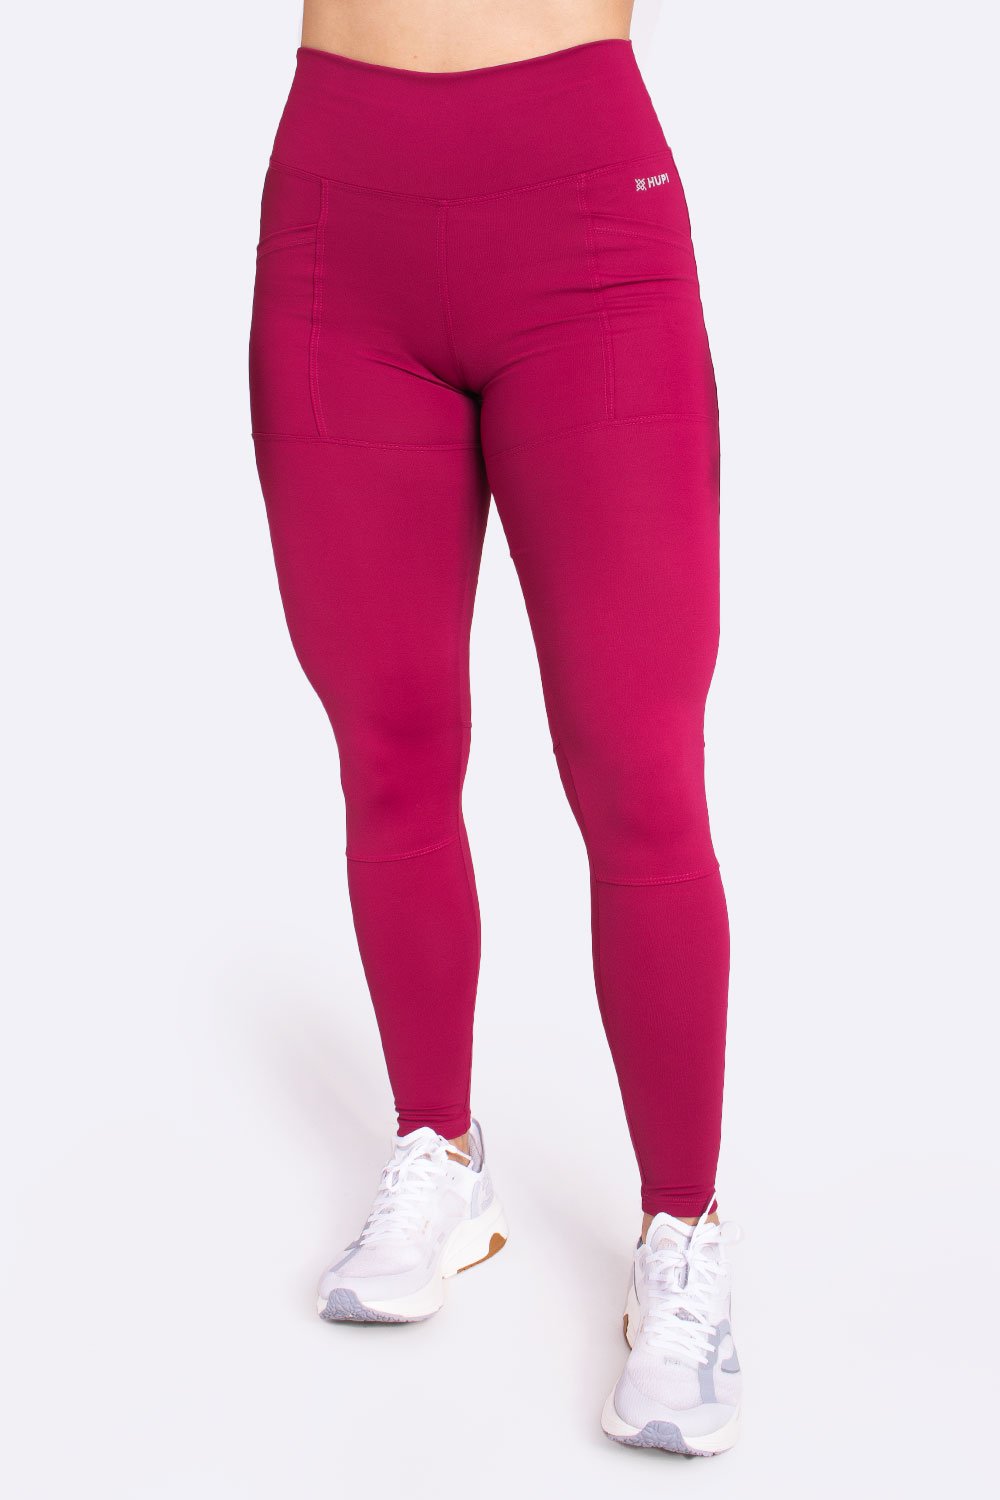 Legging Nike Sportswear Femme Feminina - Compre Agora